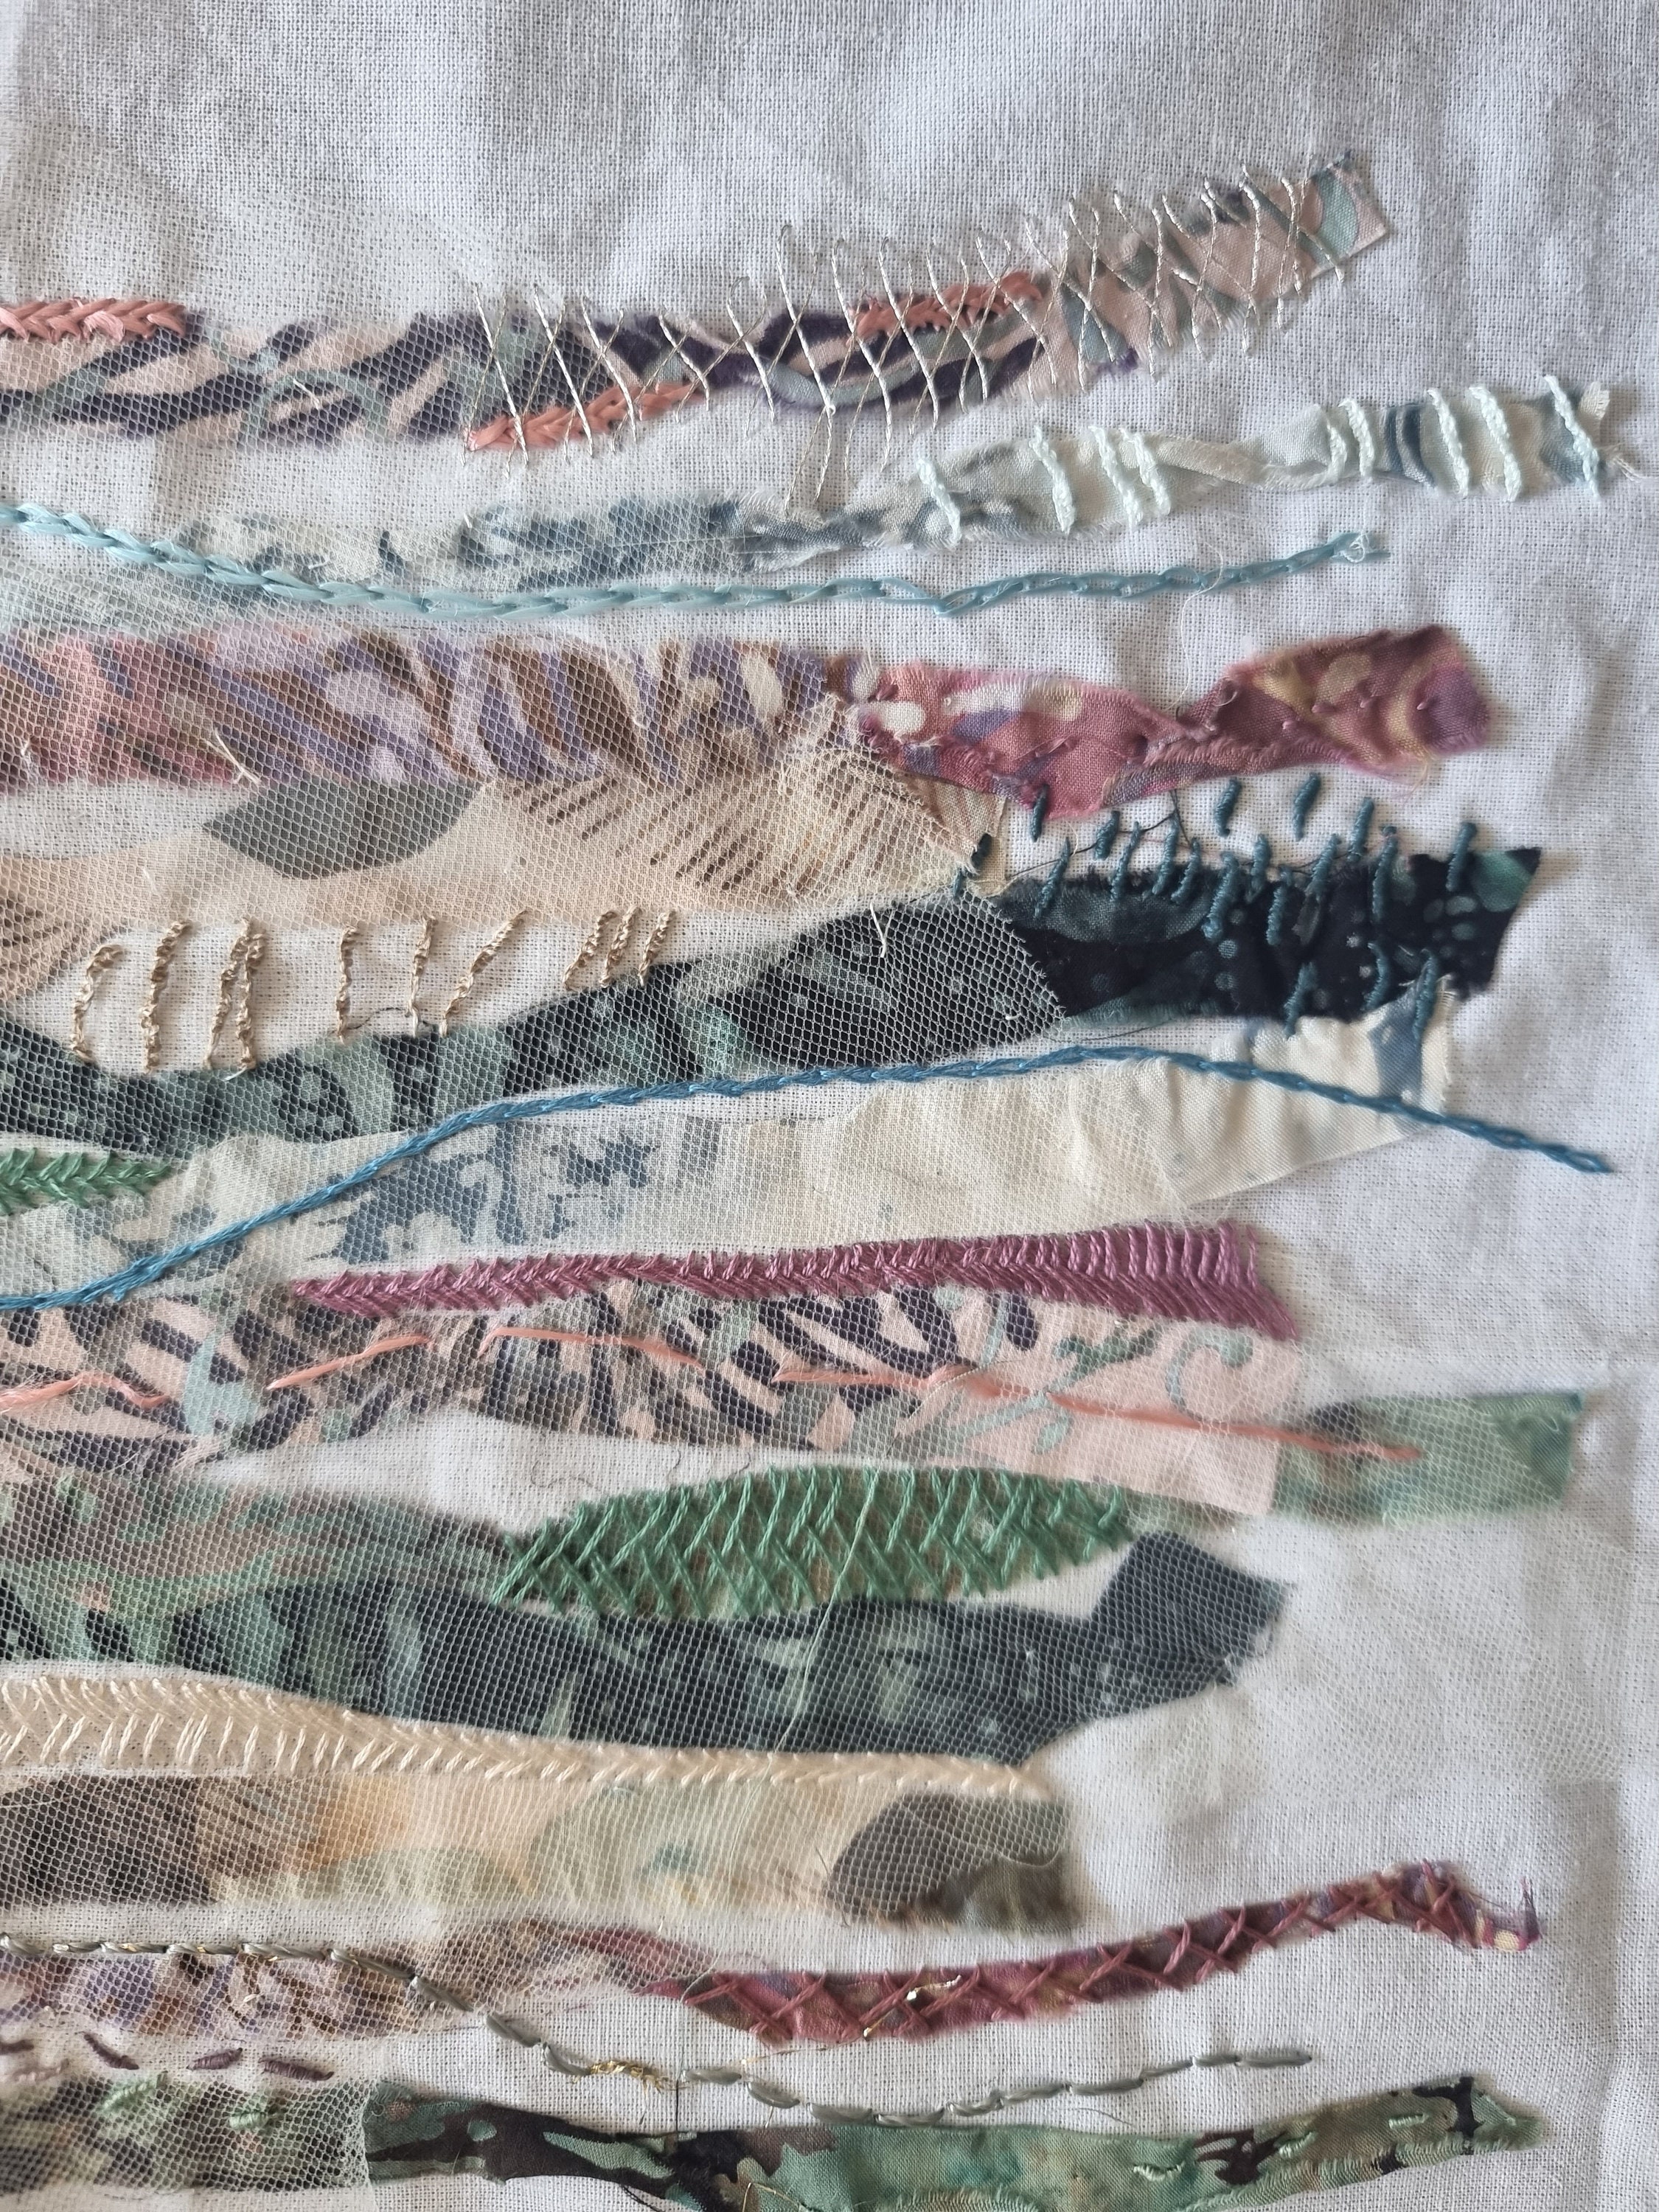 Abstract Textile Art Ribbons Mixed Media Fiber Art Hand - Etsy